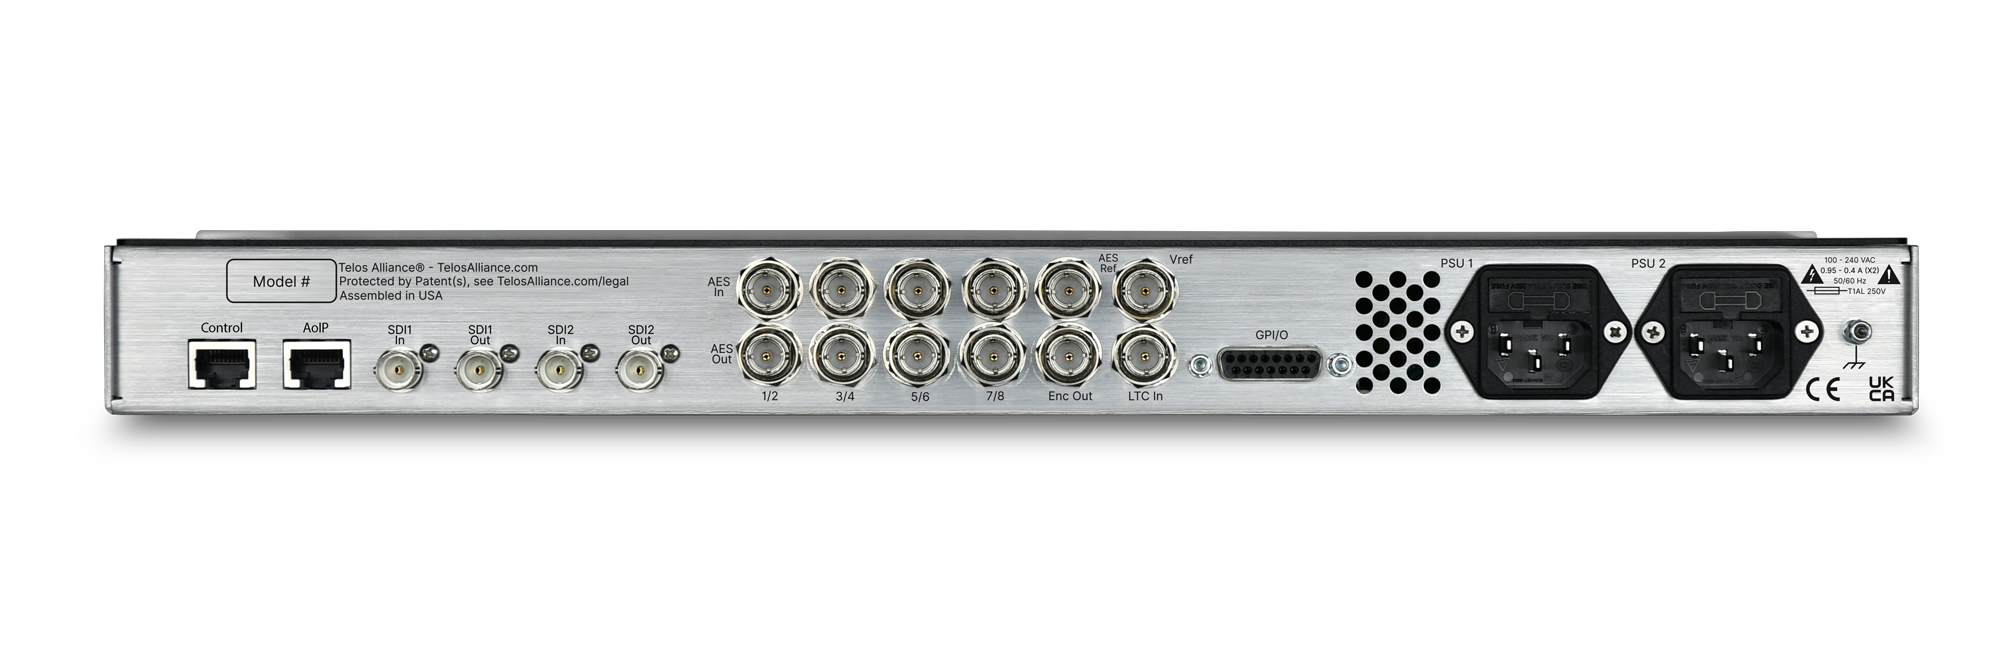 Linear Acoustic AERO.200 DTV Audio Processor